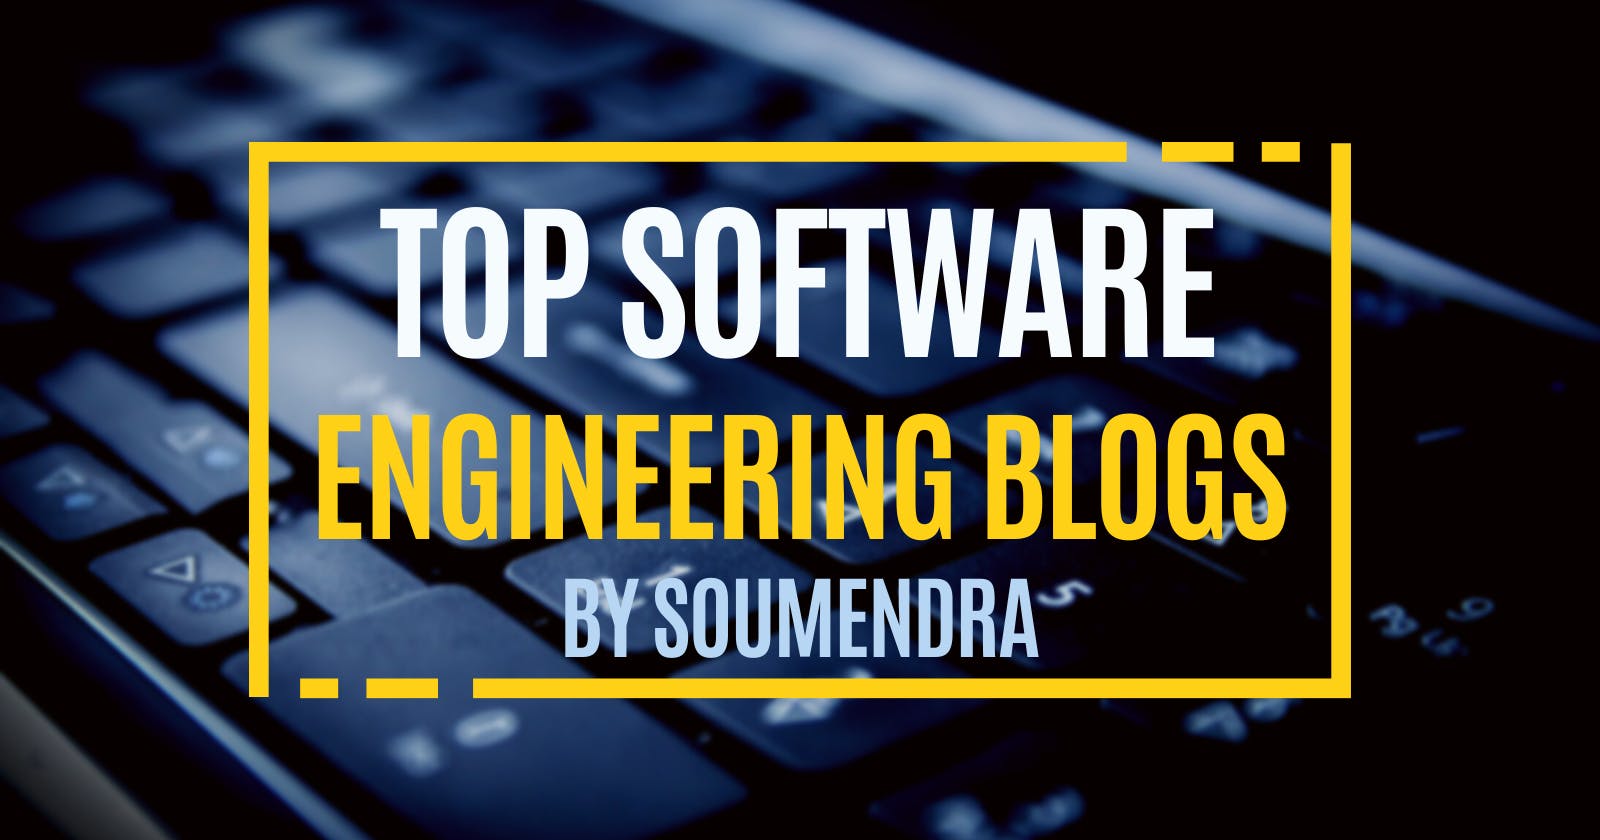 Top Software Engineering Blogs